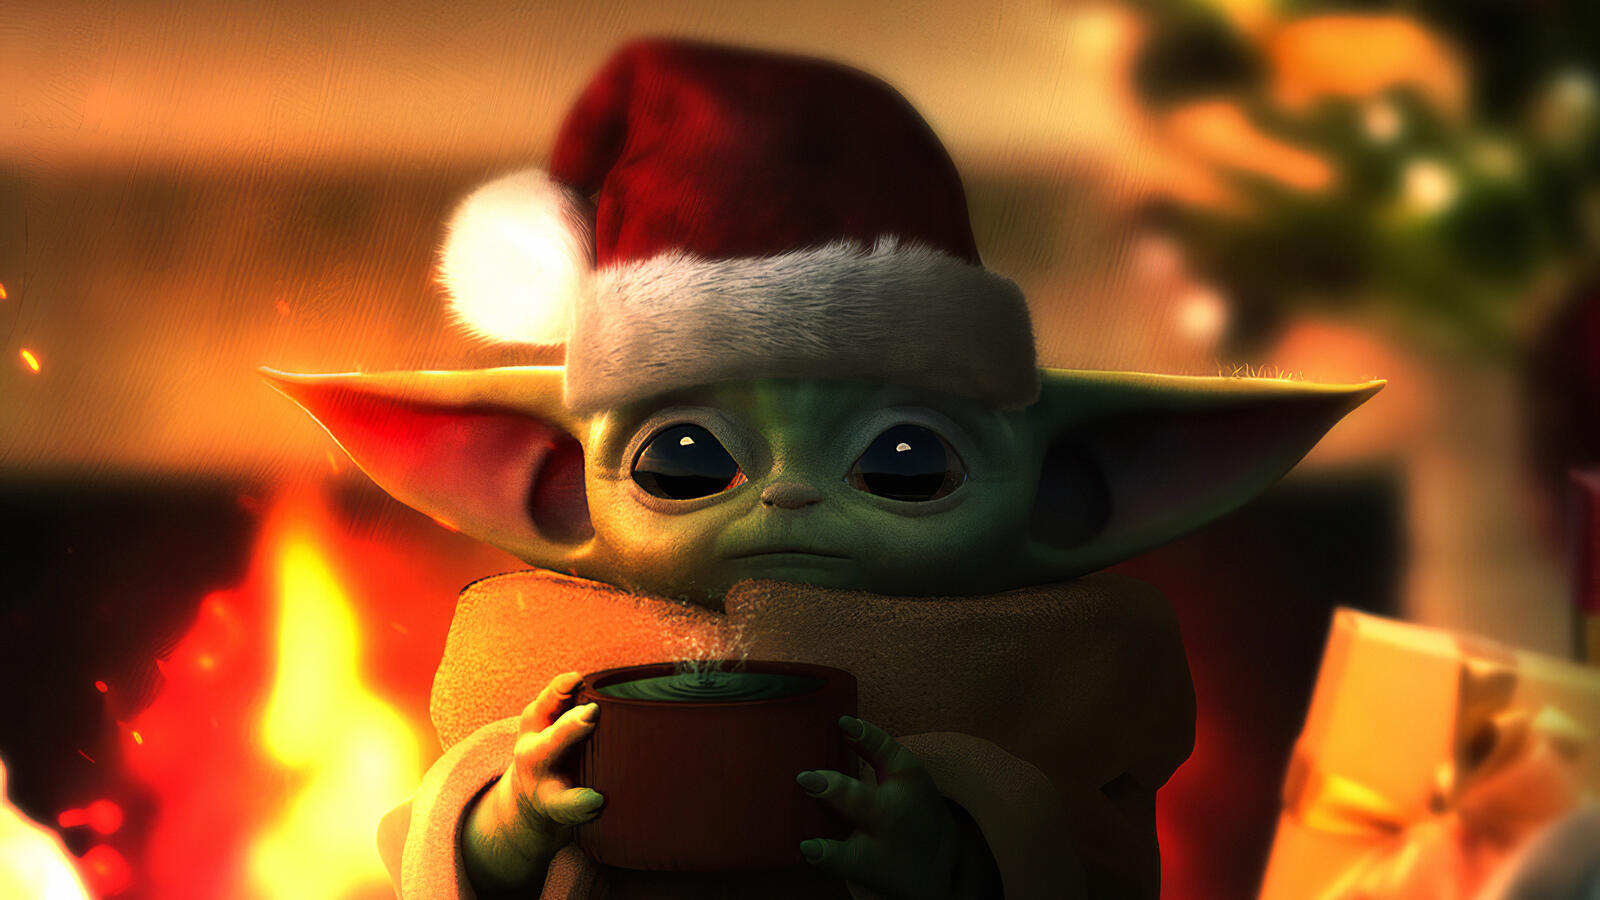 Free photo Baby Yoda from the Star Wars movie.